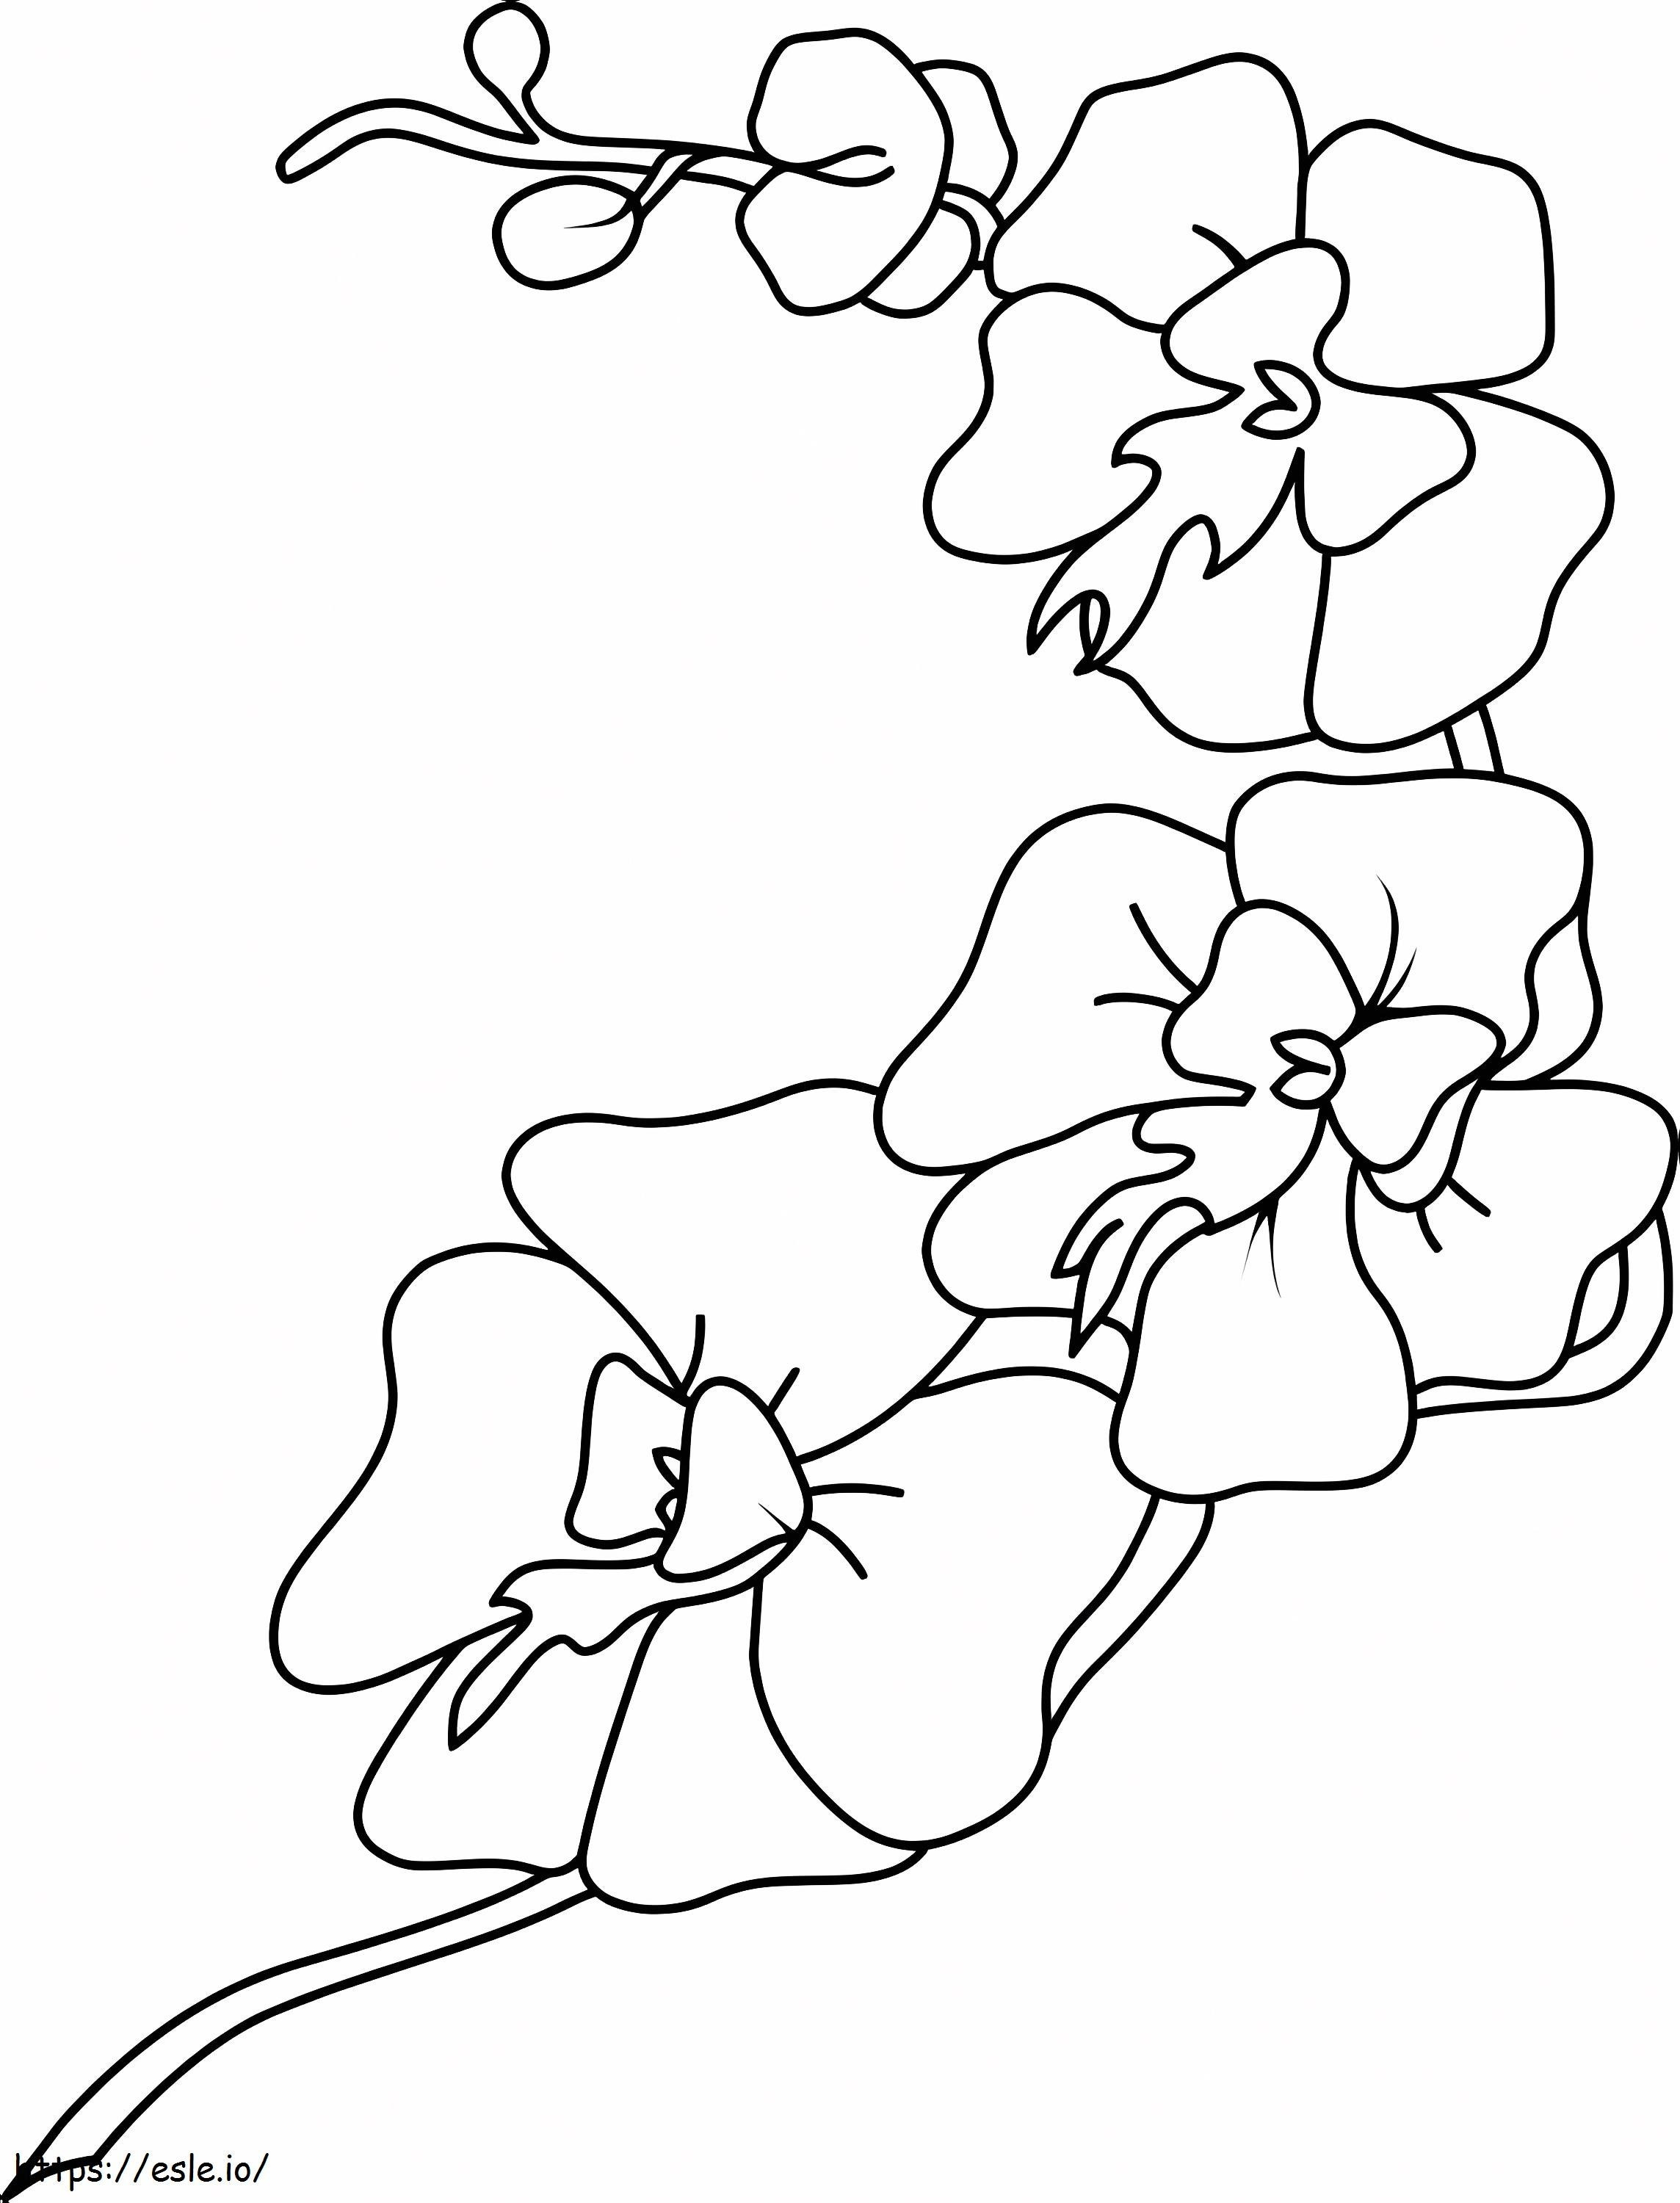 Urocza orchidea kolorowanka